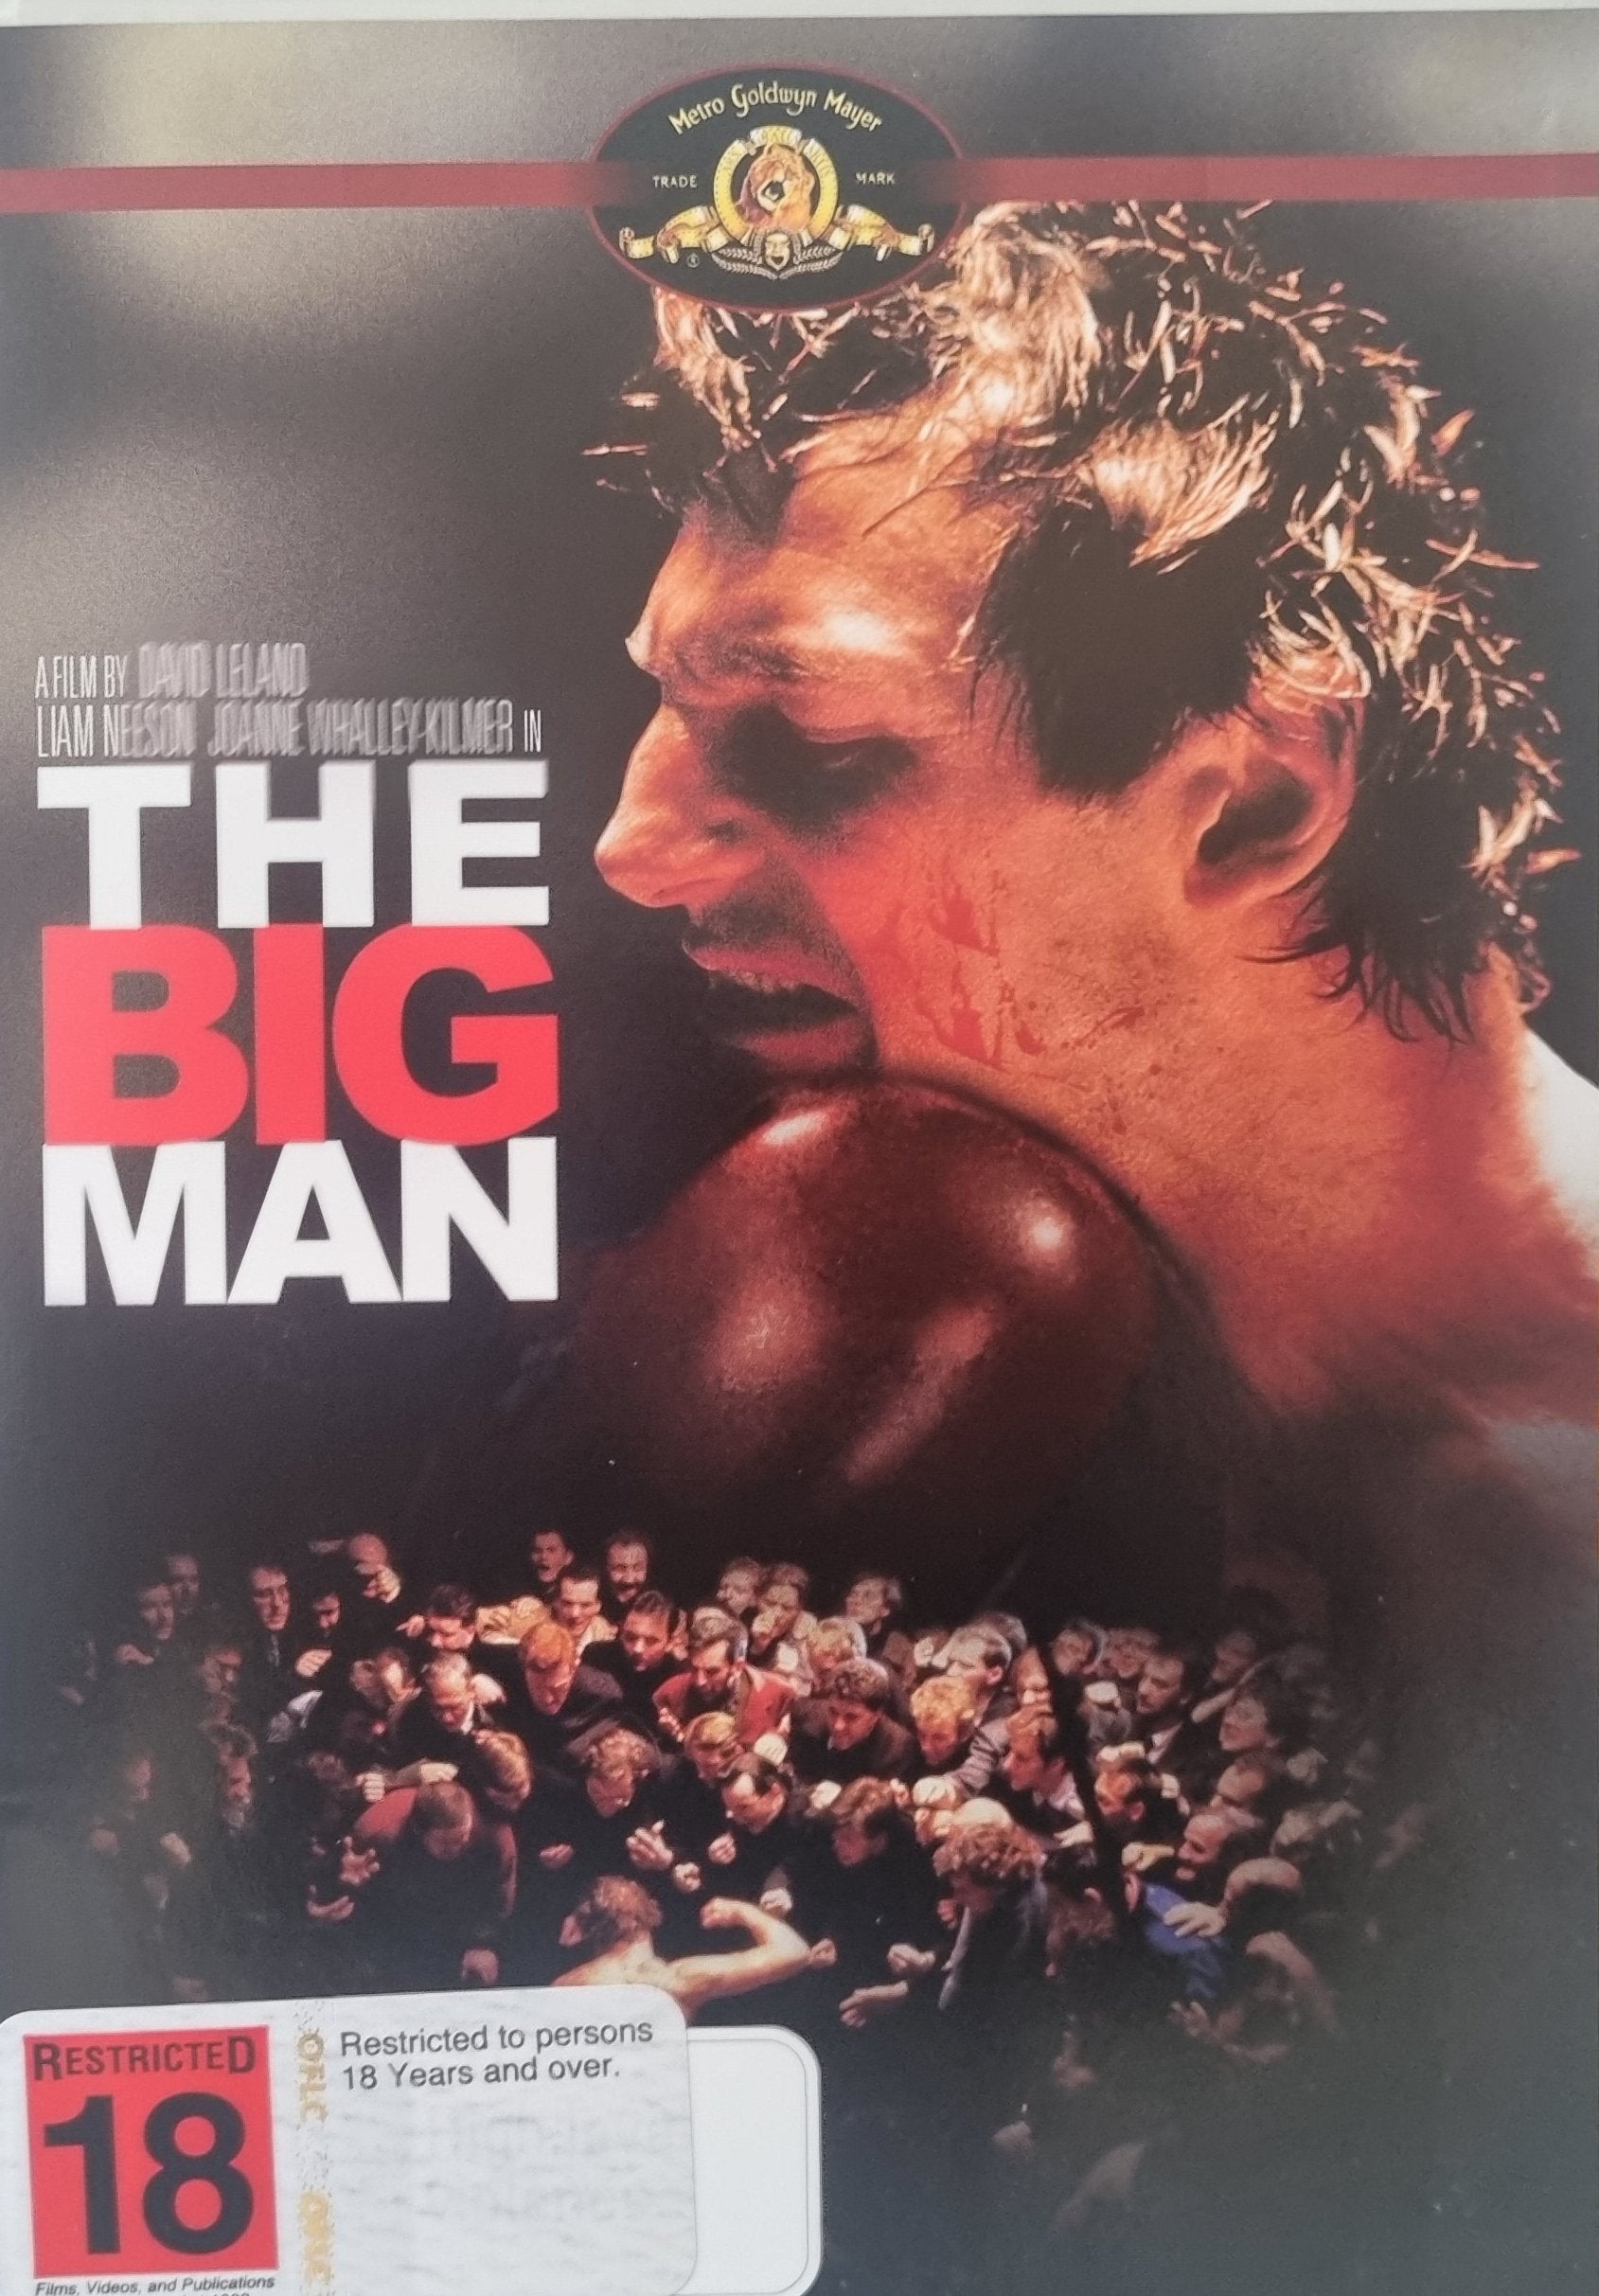 The Big Man (DVD) aka Crossing the Line